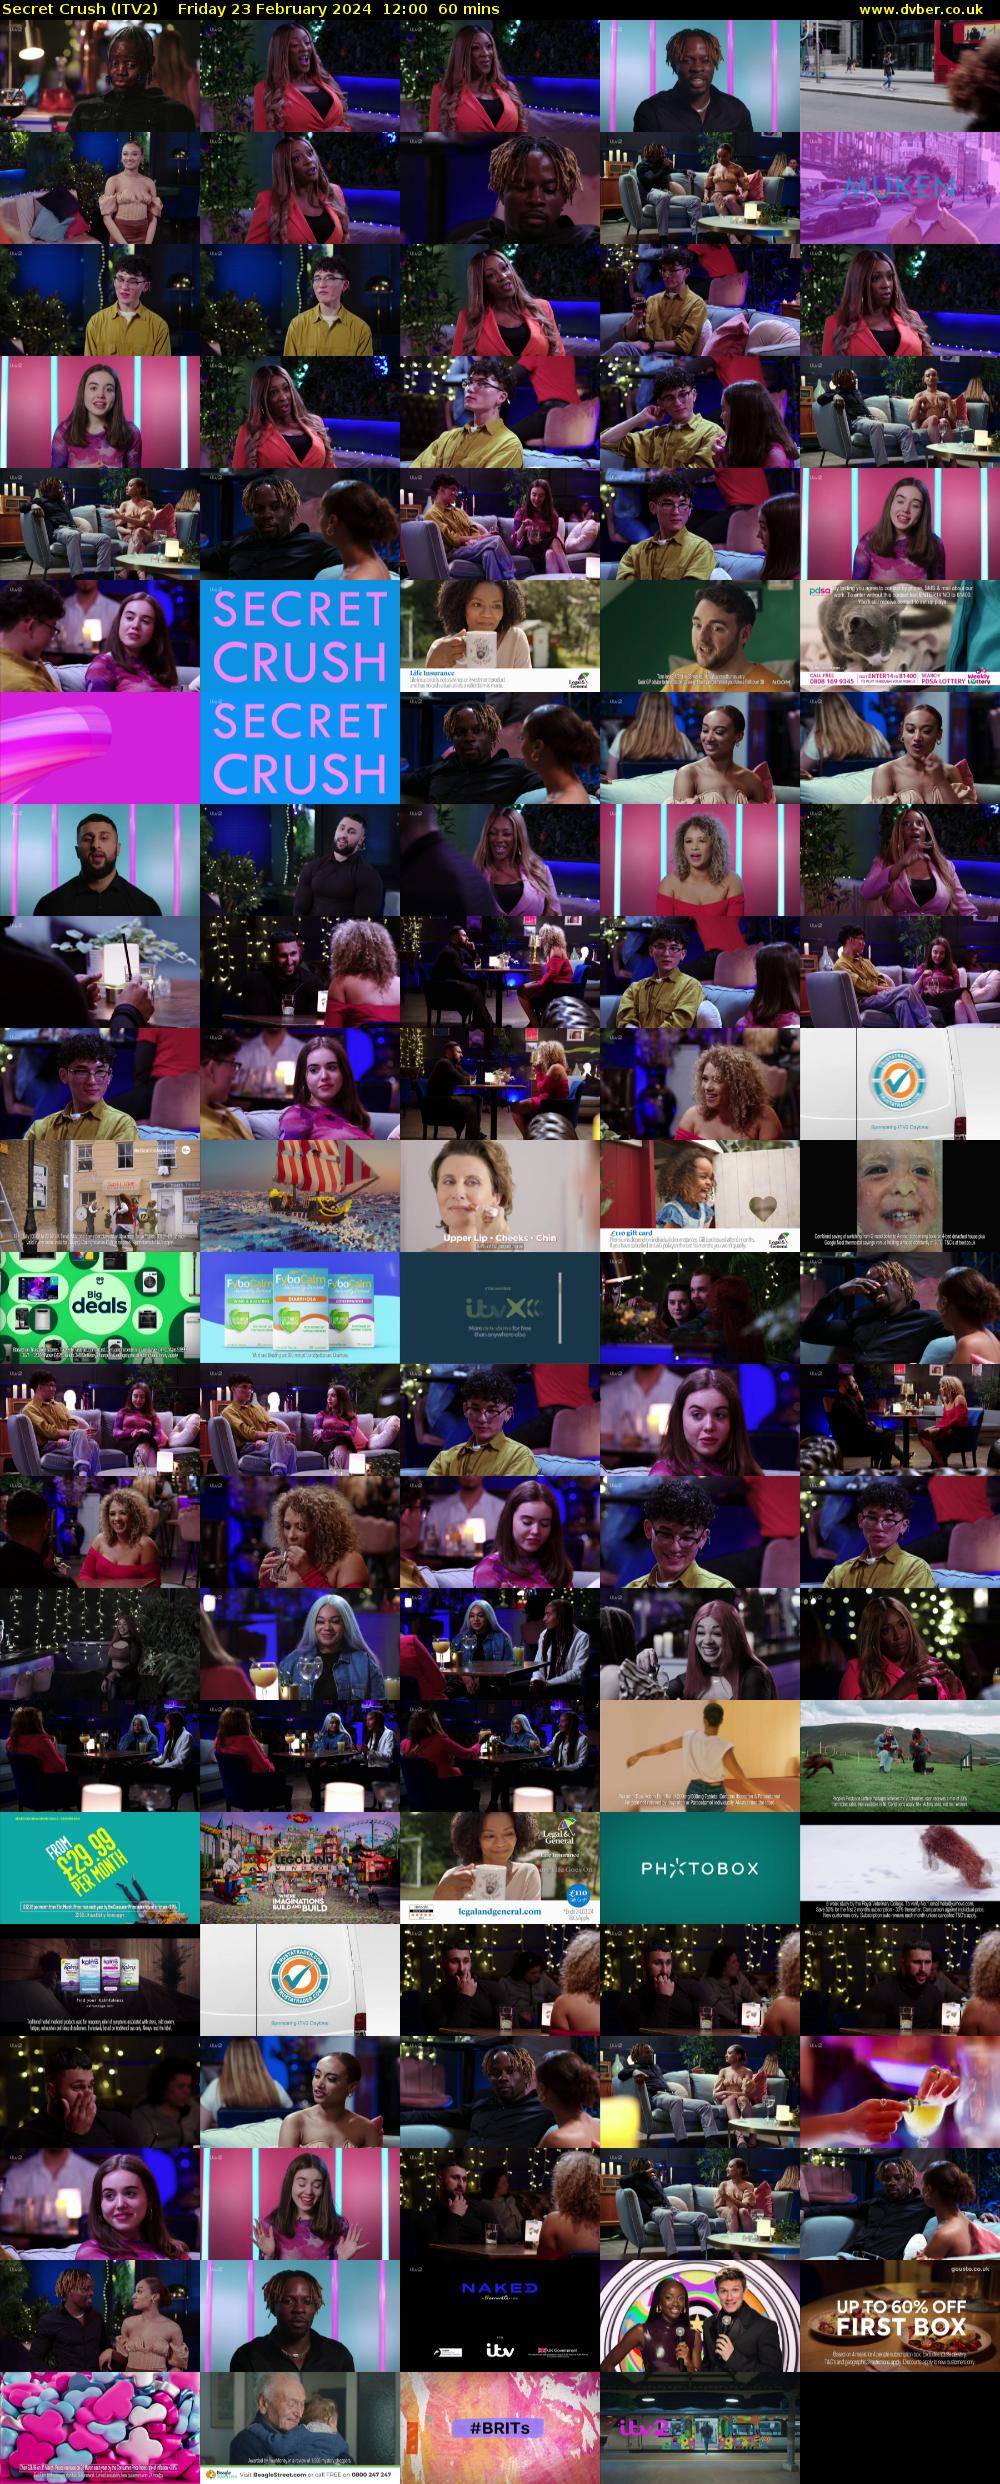 Secret Crush (ITV2) Friday 23 February 2024 12:00 - 13:00